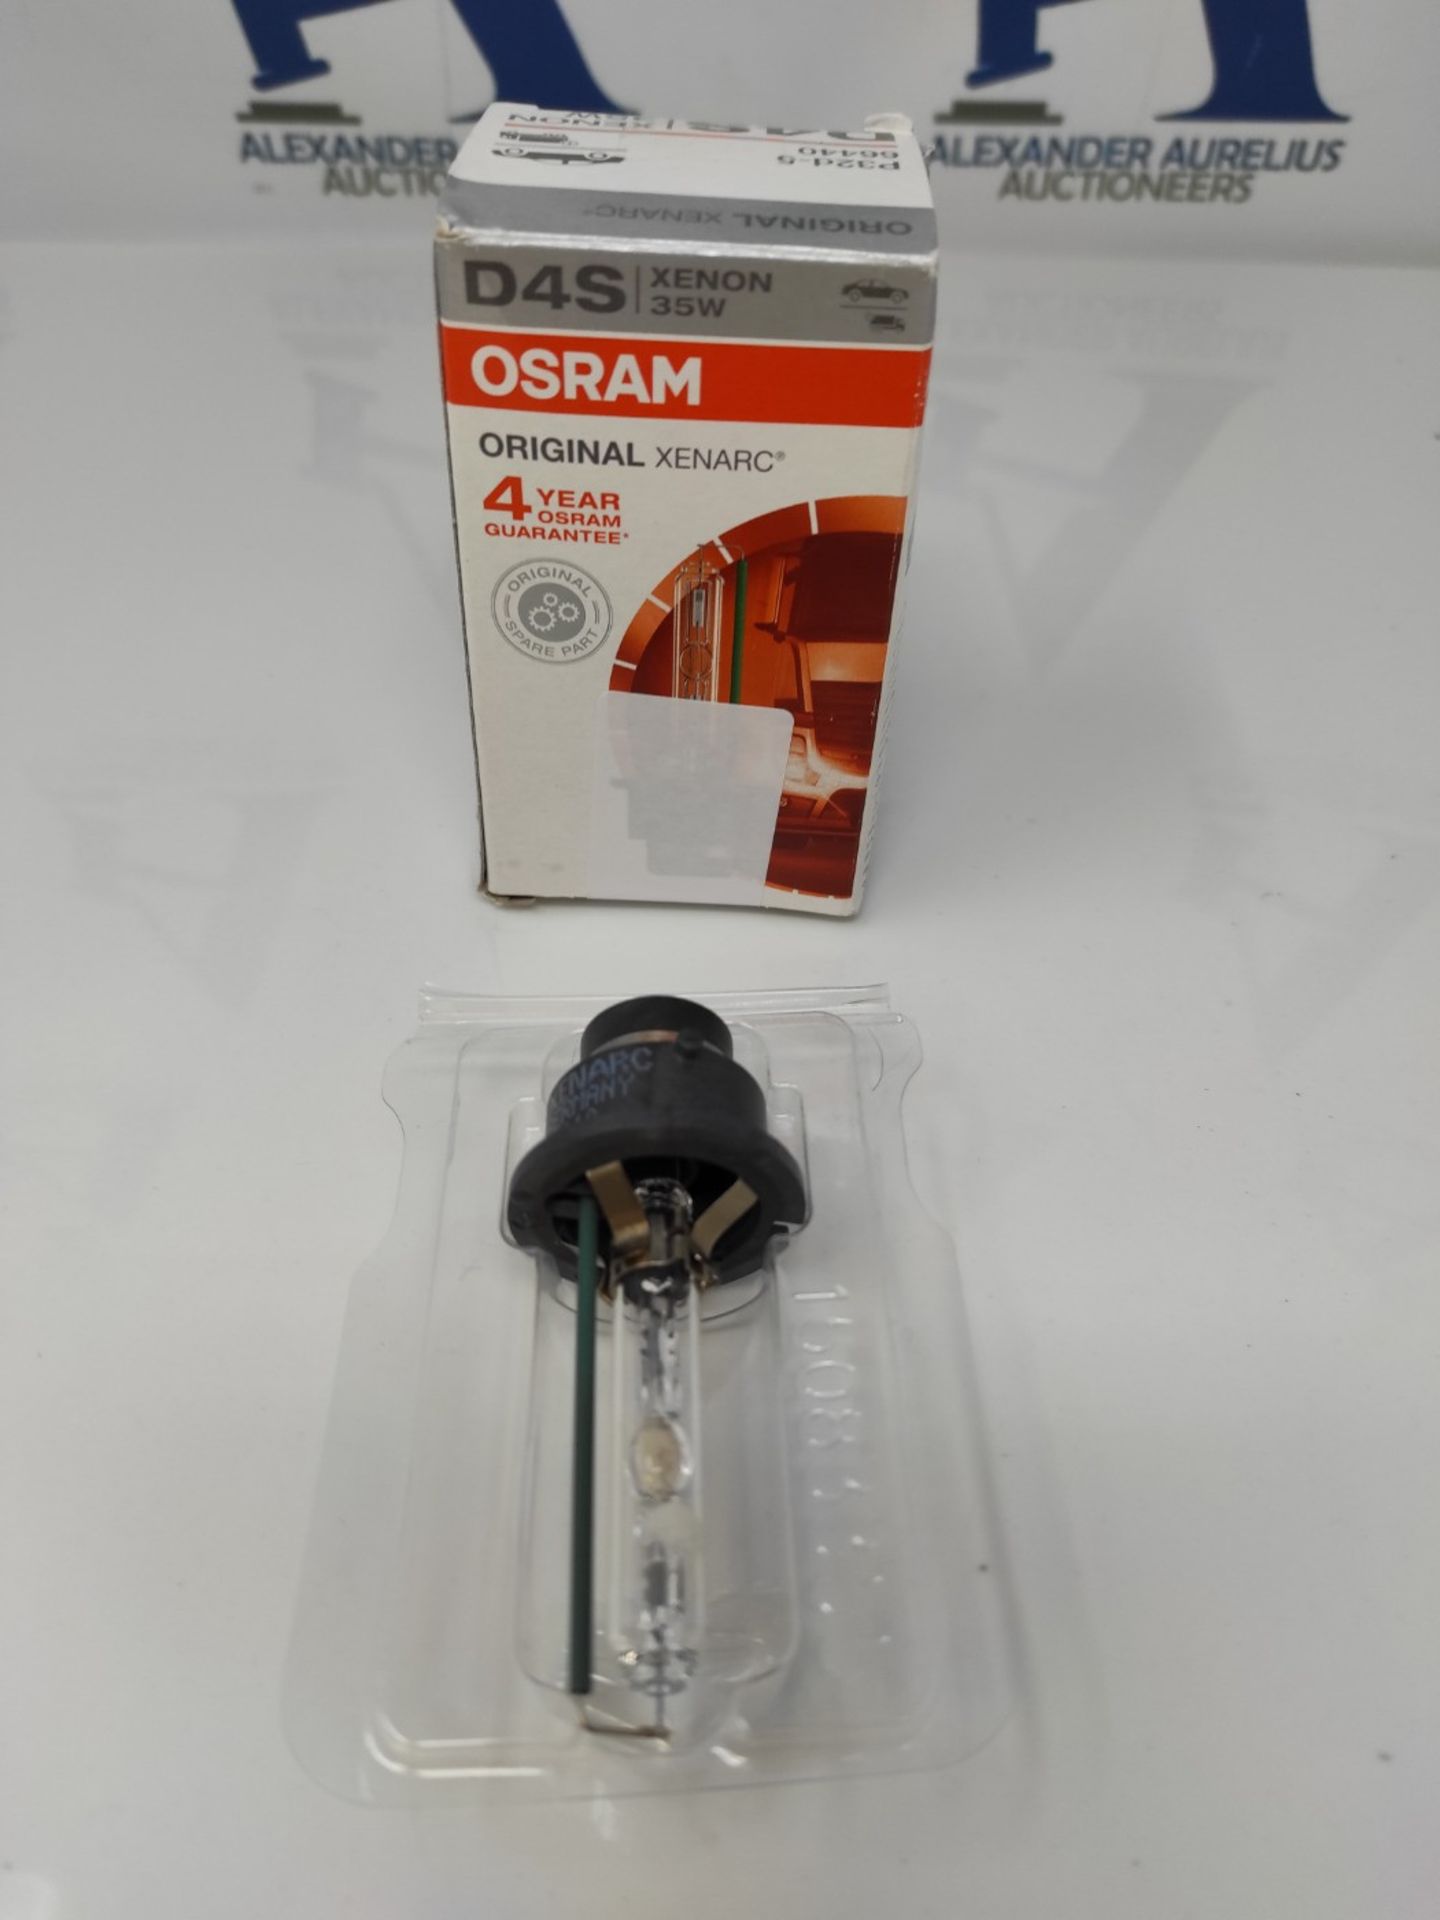 OSRAM XENARC ORIGINAL D4S HID, xenon headlight bulb, 66440, folding carton box (1 piec - Image 2 of 2